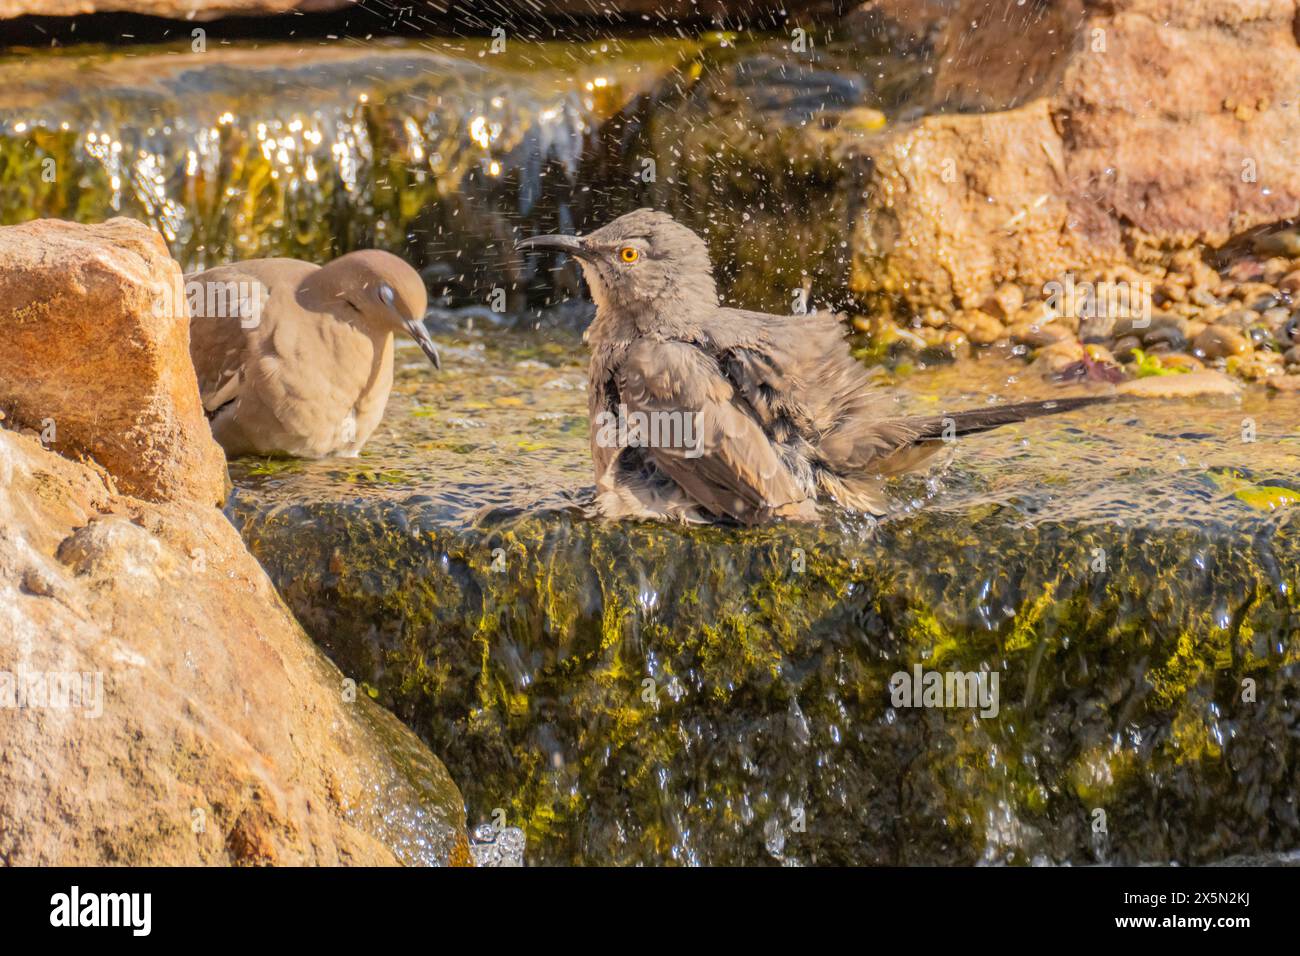 USA, New Mexico, Sandoval County. Vögel, die im Wasserfall des Brunnens baden. Stockfoto